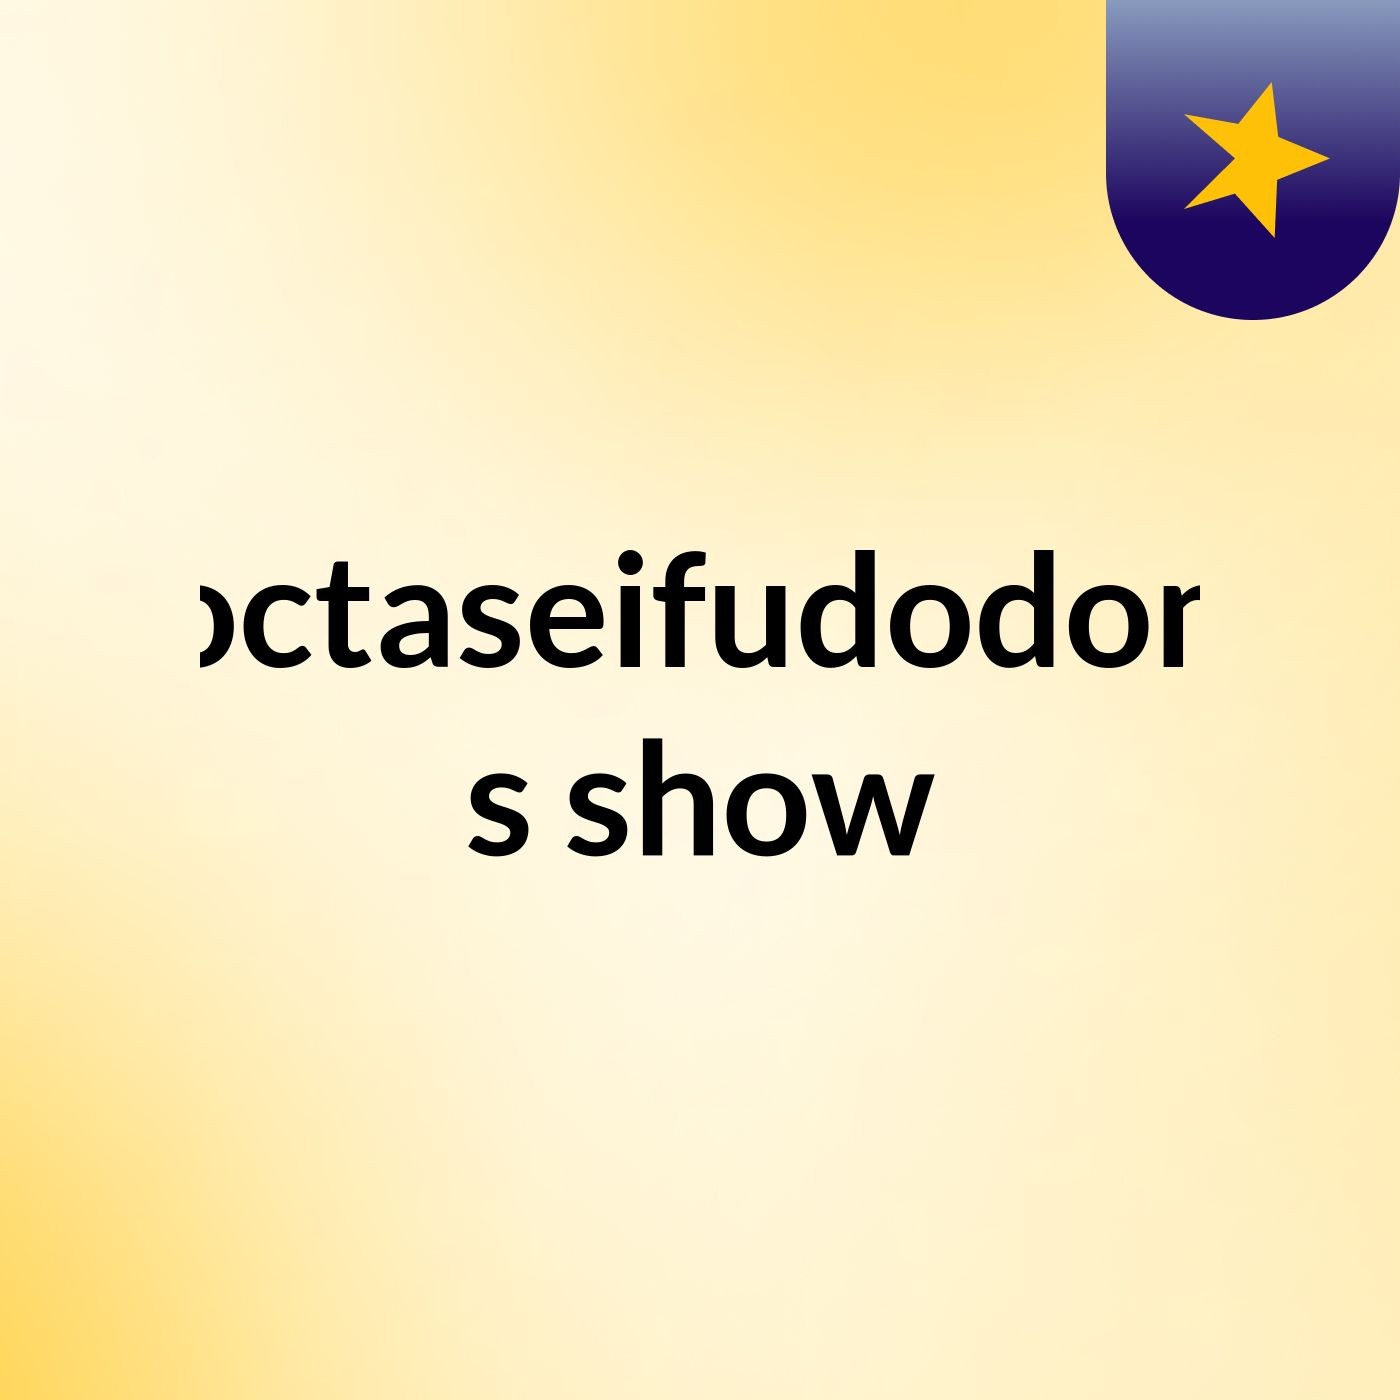 Doctaseifudodoma's show